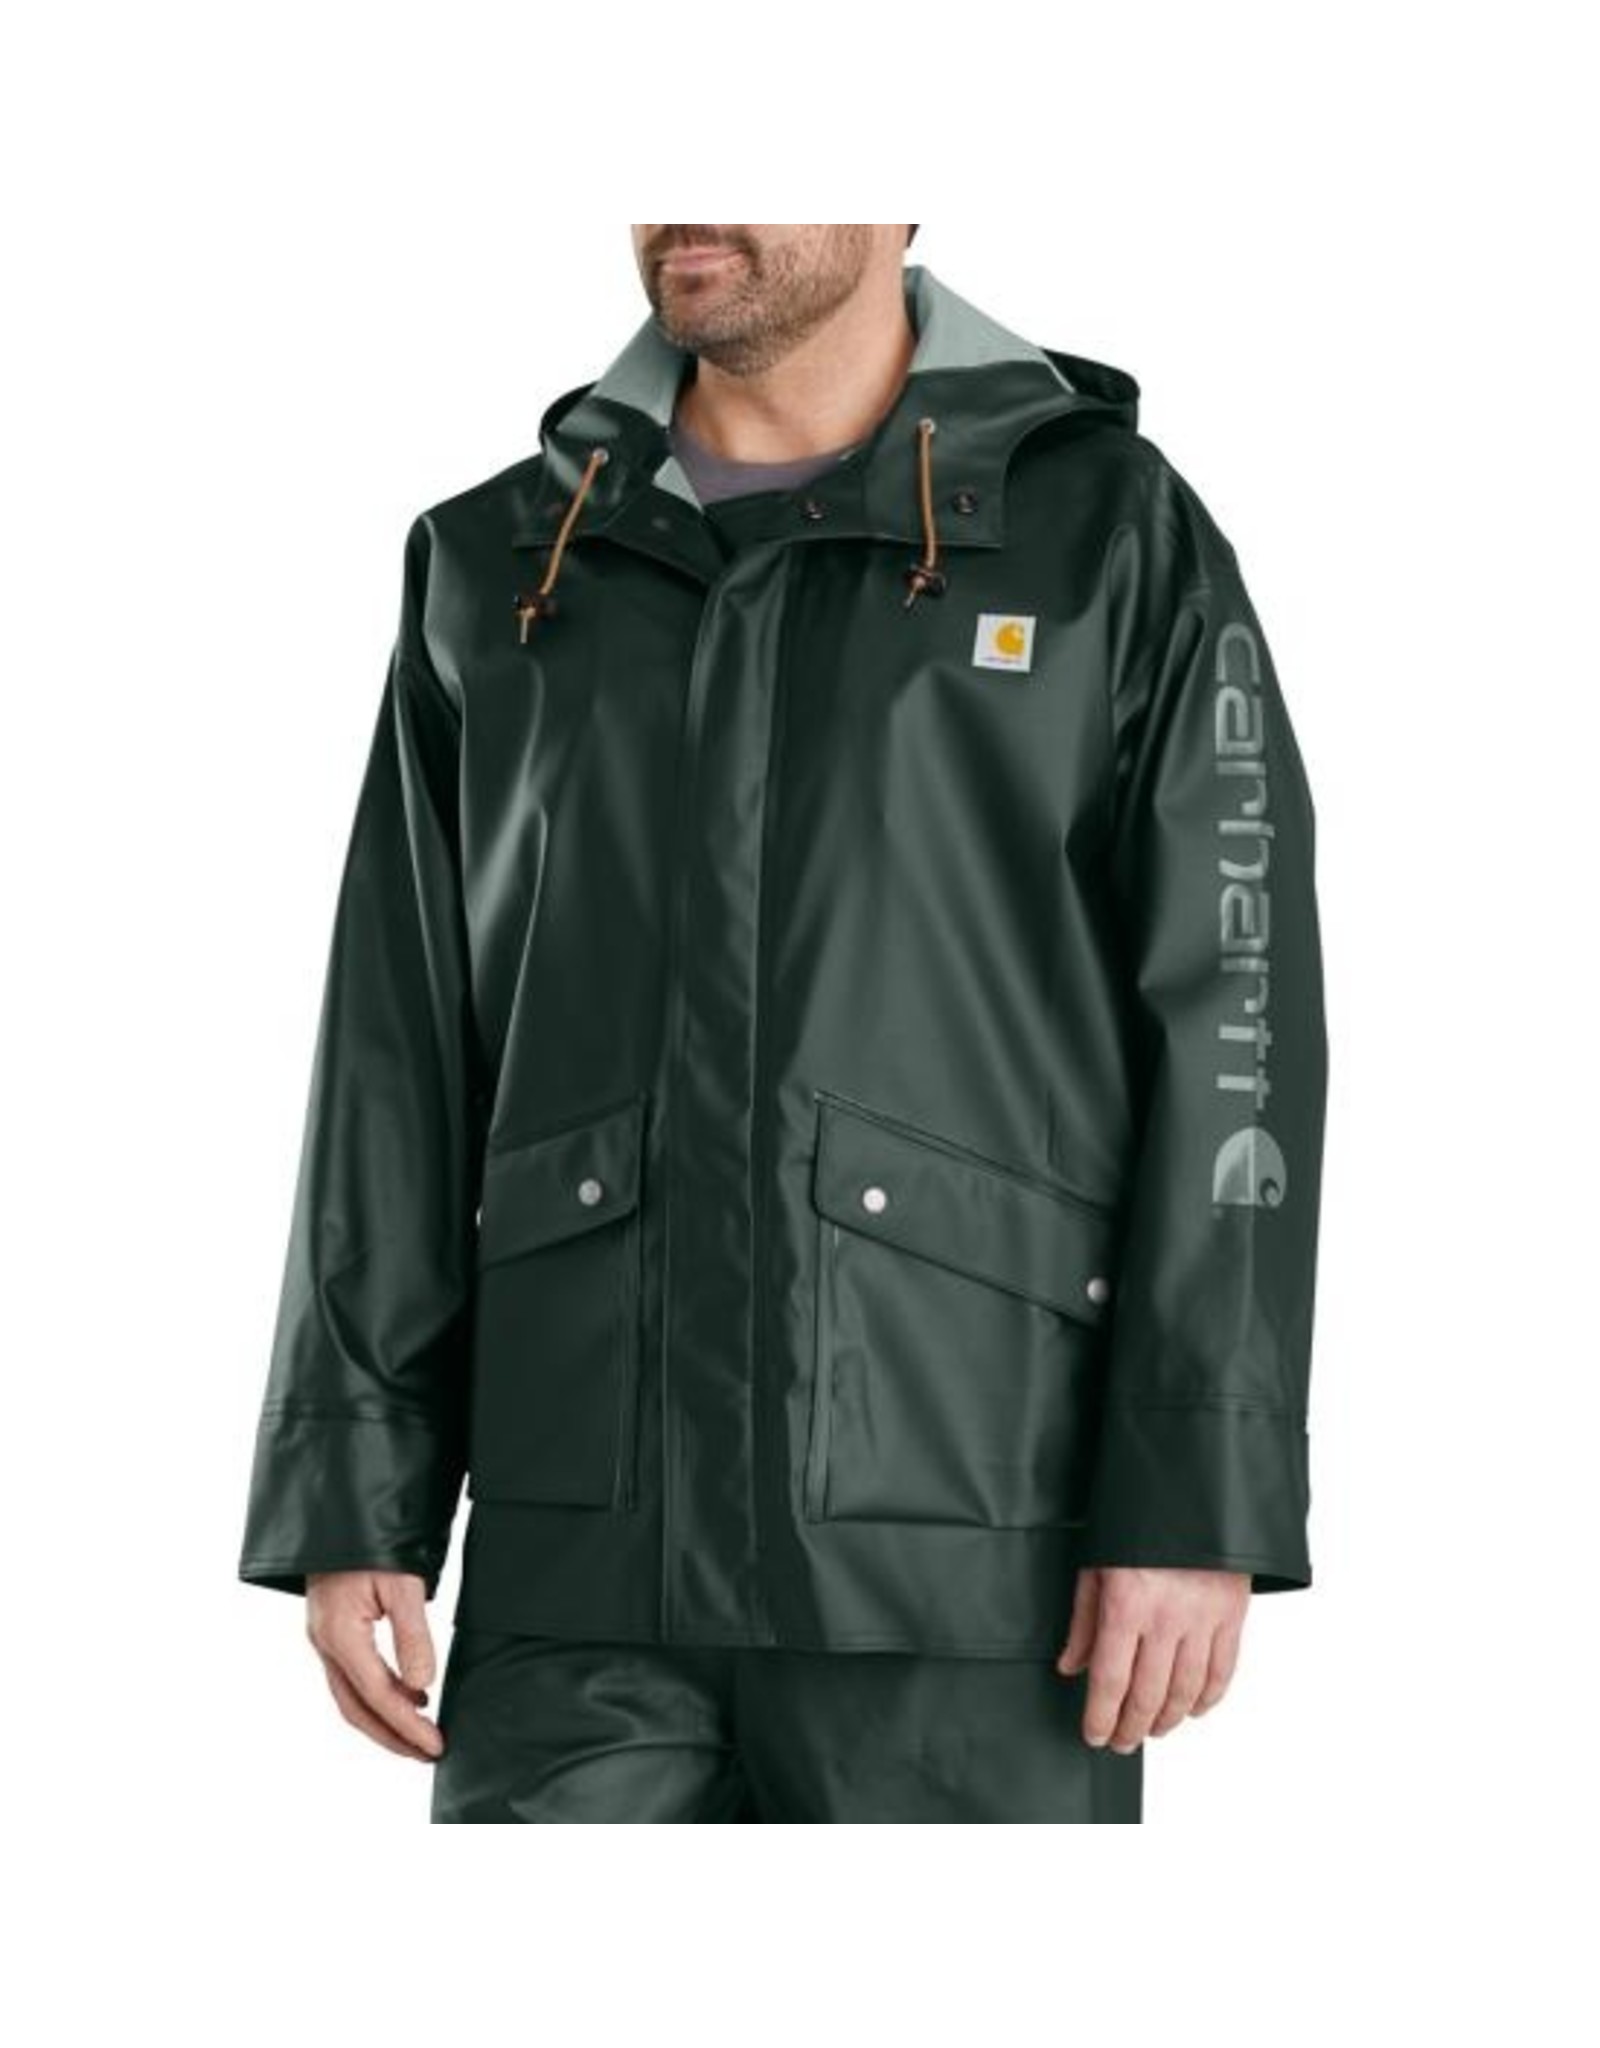 Carhartt Men's Black 103508-001 Waterproof Jacket